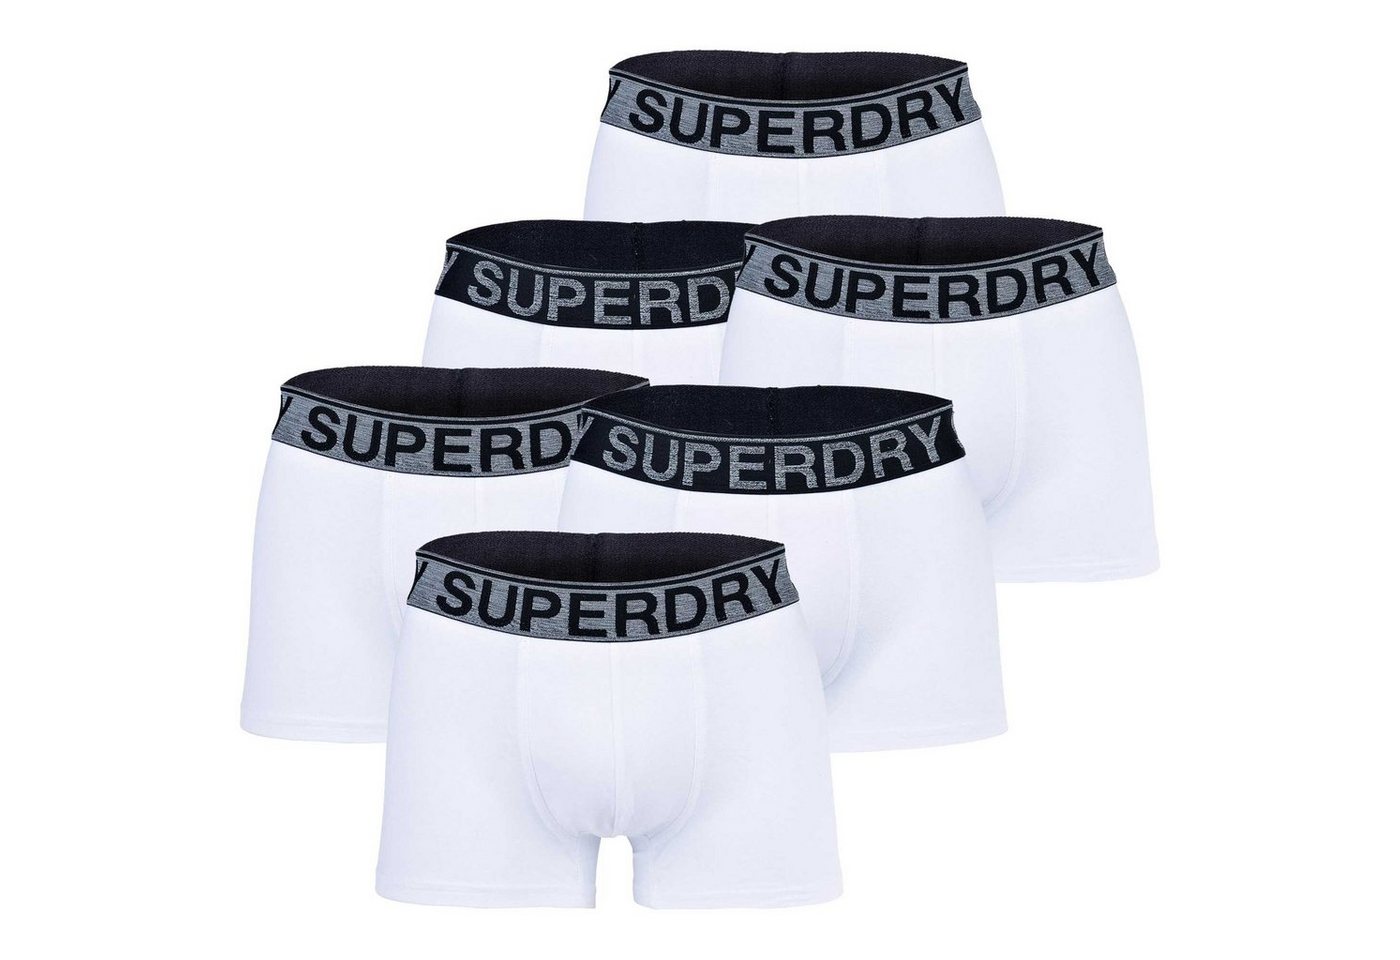 Superdry Boxer Herren Boxershorts, 6er Pack - TRUNK SIX PACK von Superdry